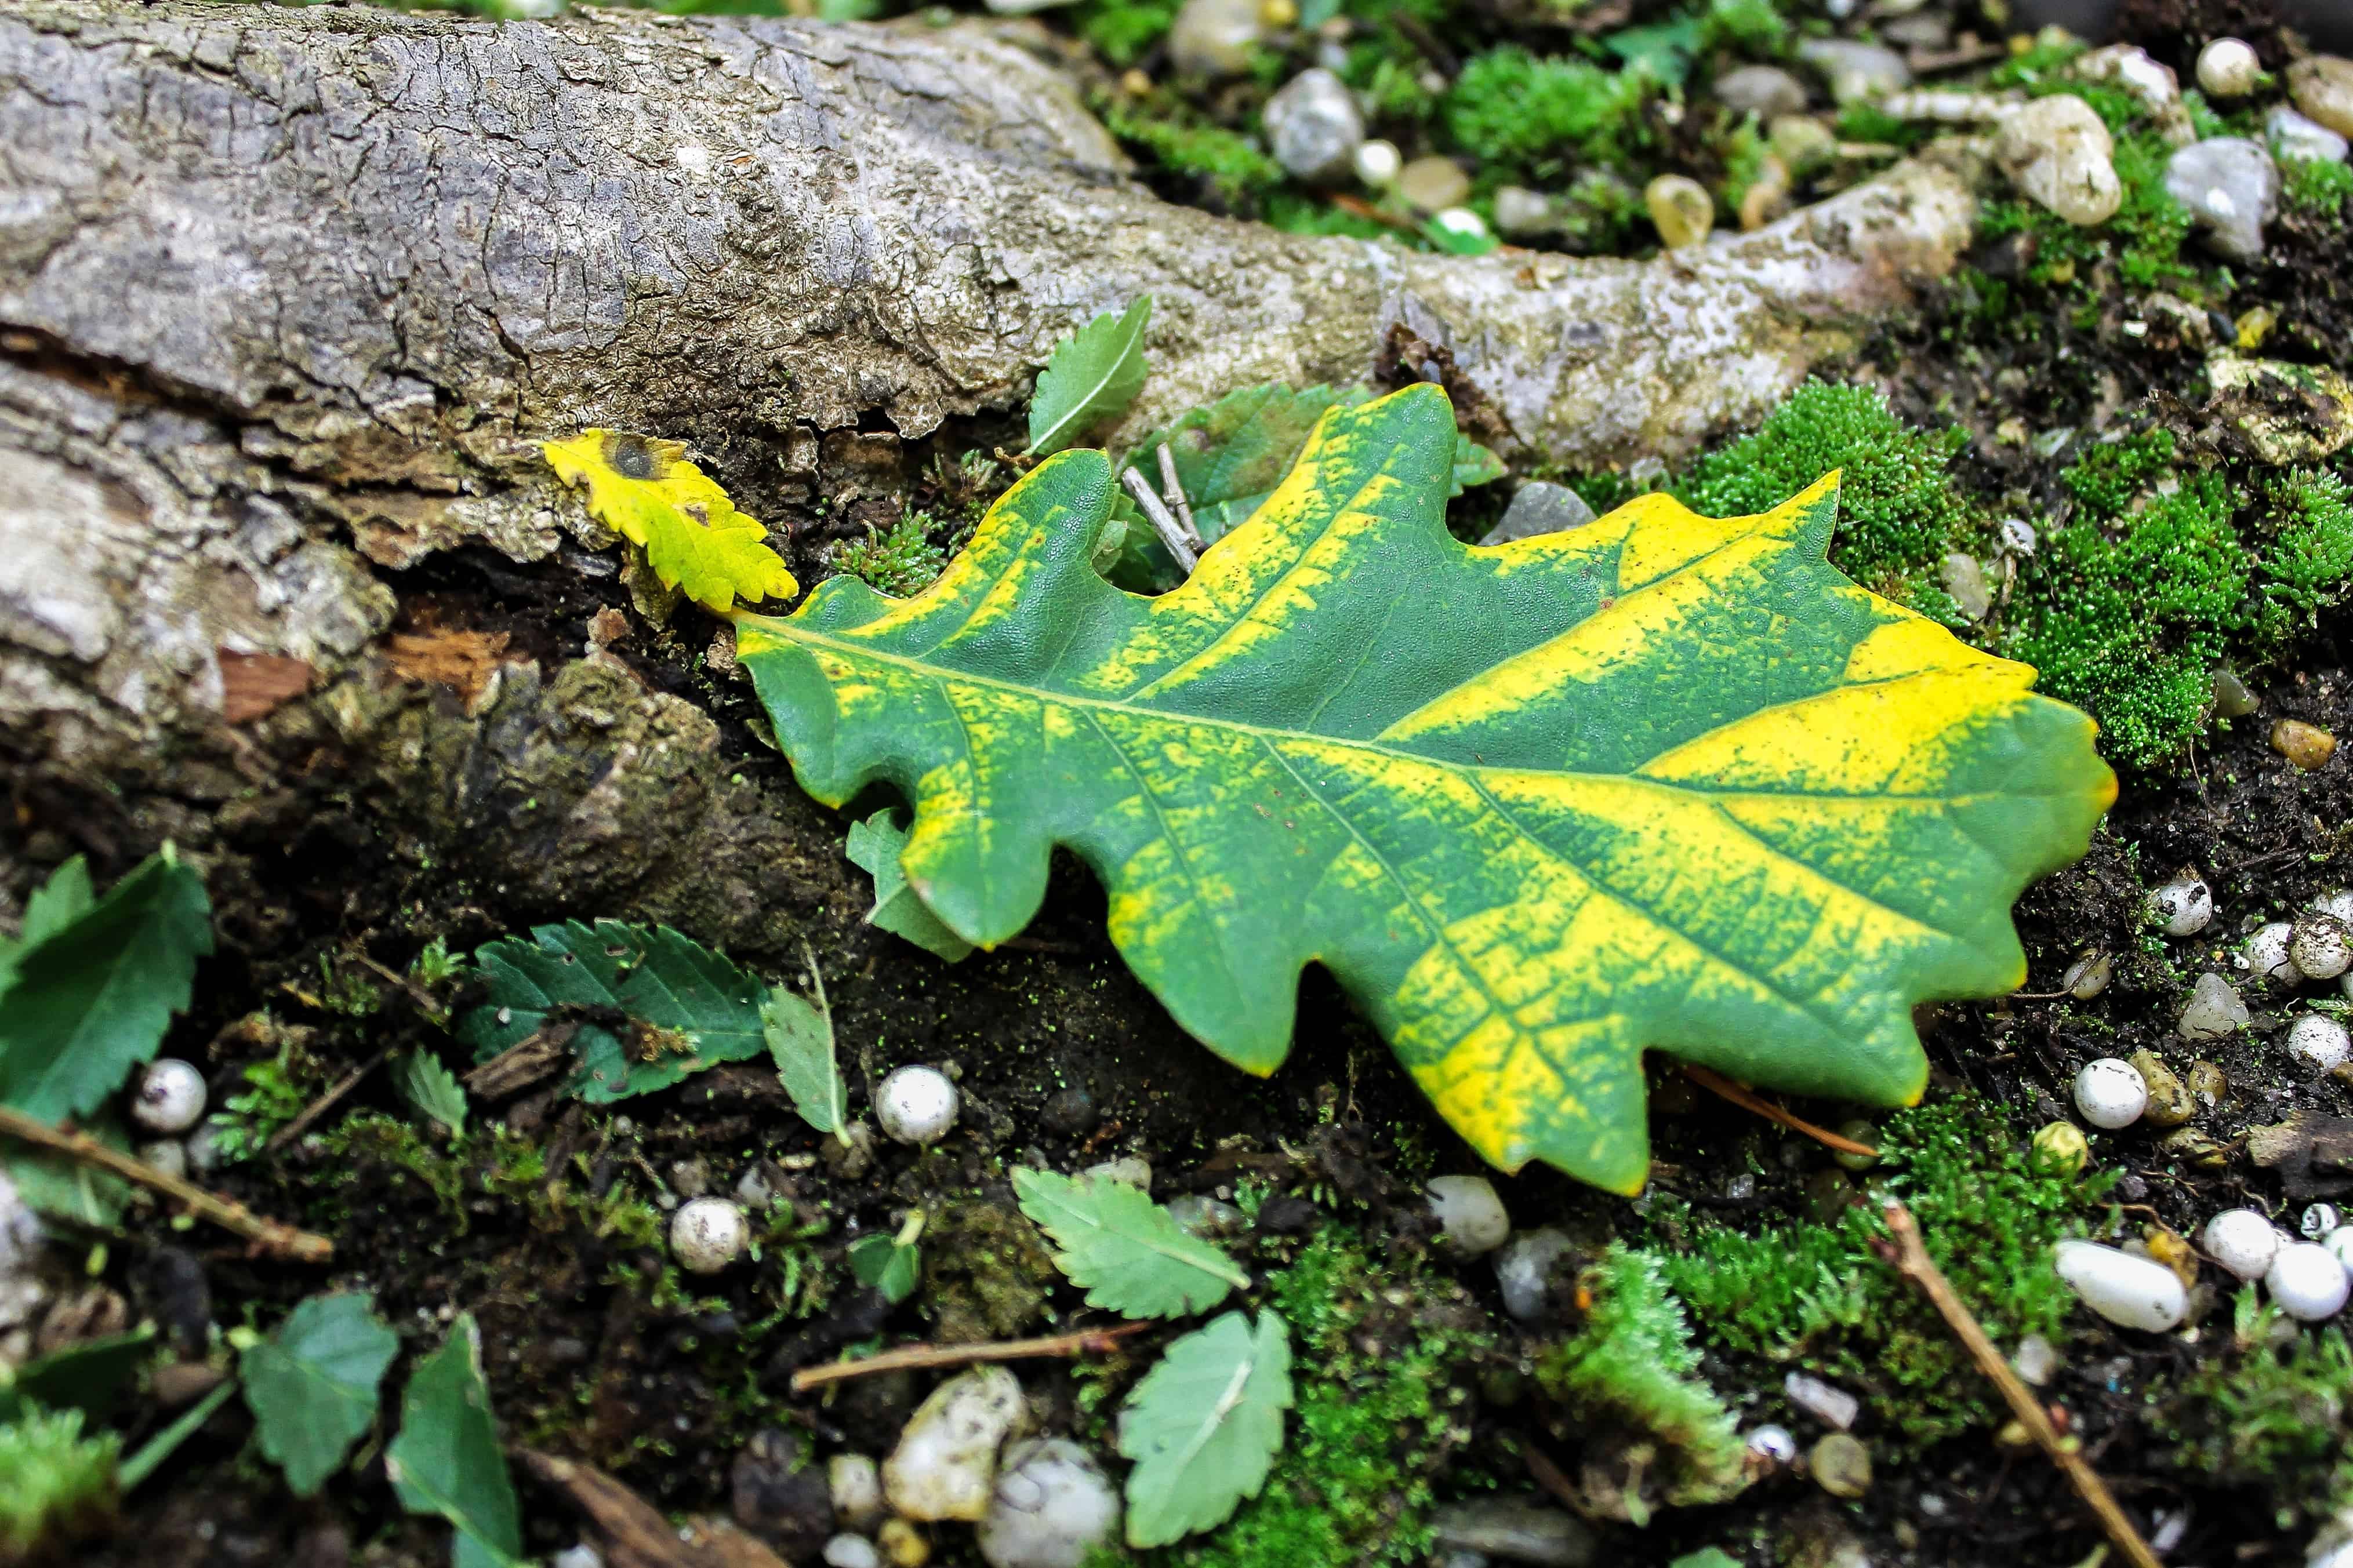 Leaf & leaves free images, public domain images